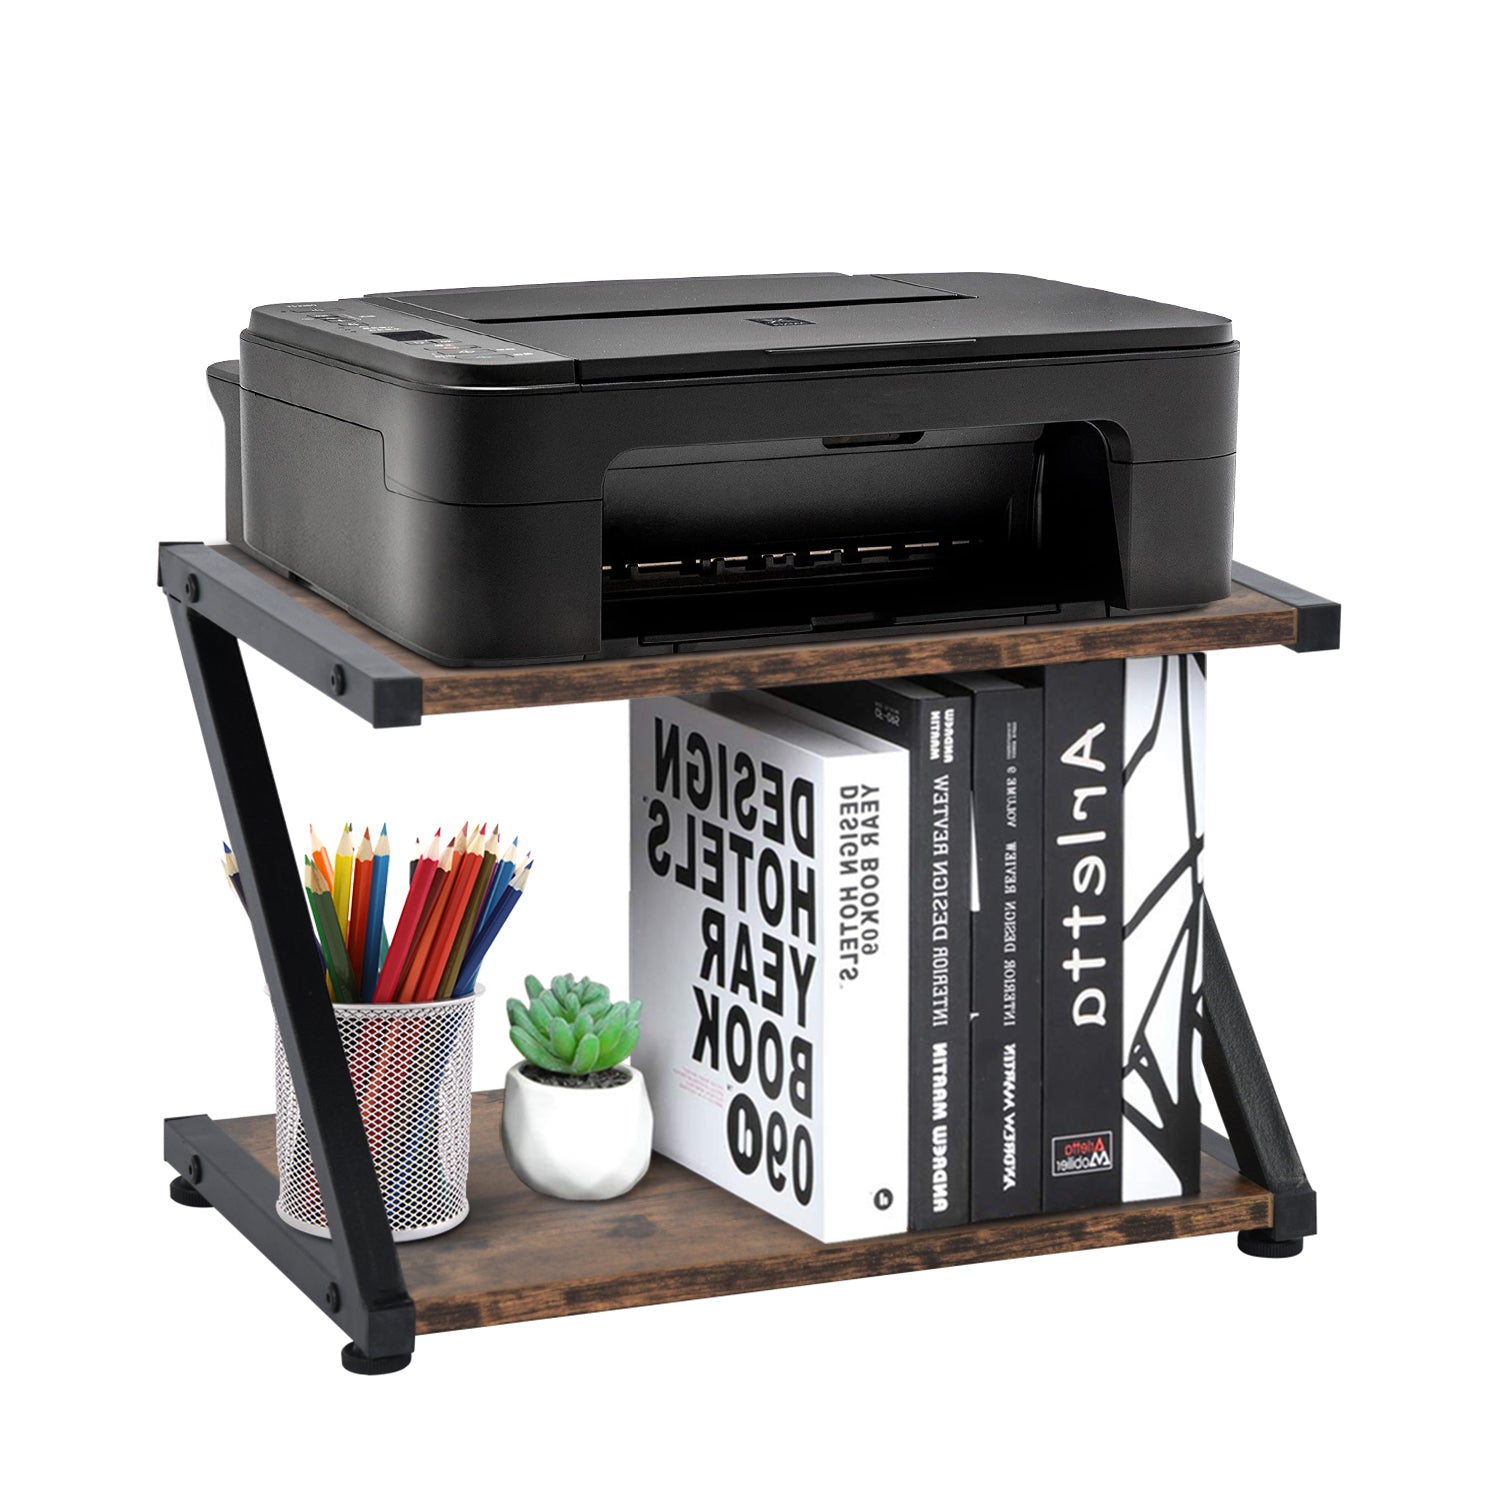 Soporte de 2 Niveles para Impresora – FurnitureR